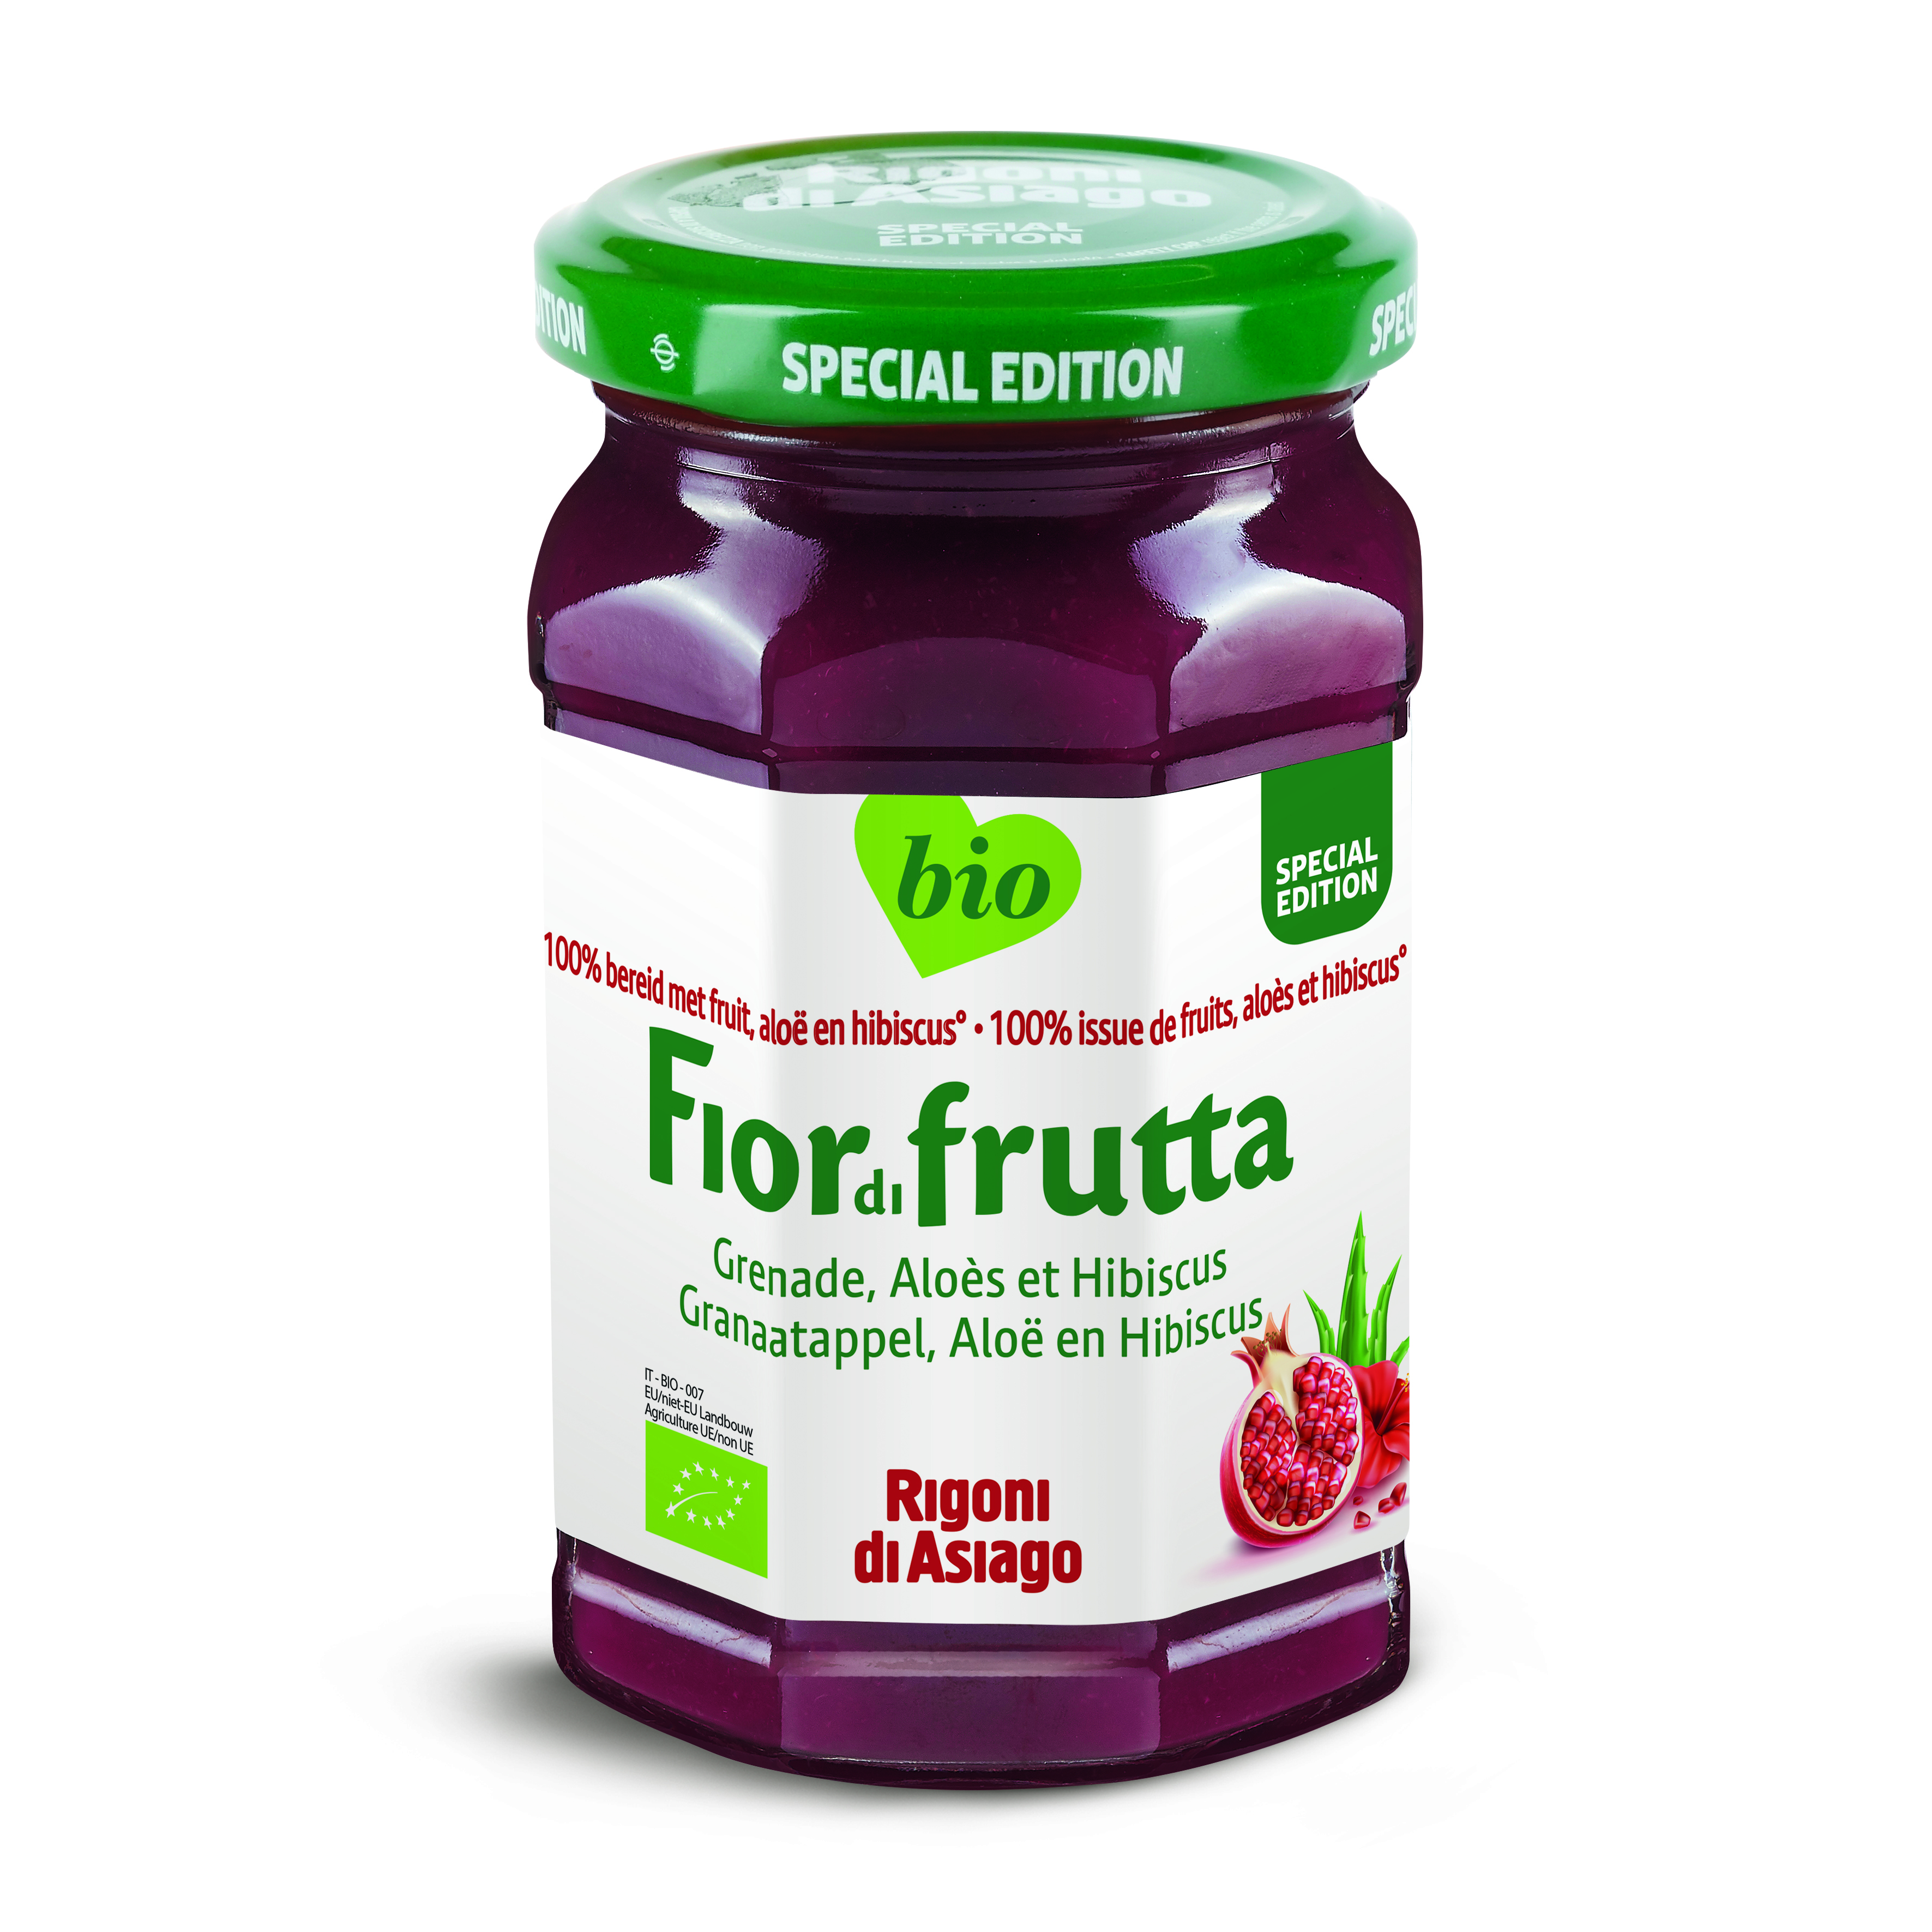 Fiordifrutta Granaatappel aloë vera en hibiscus confituur bio 250g - 9721